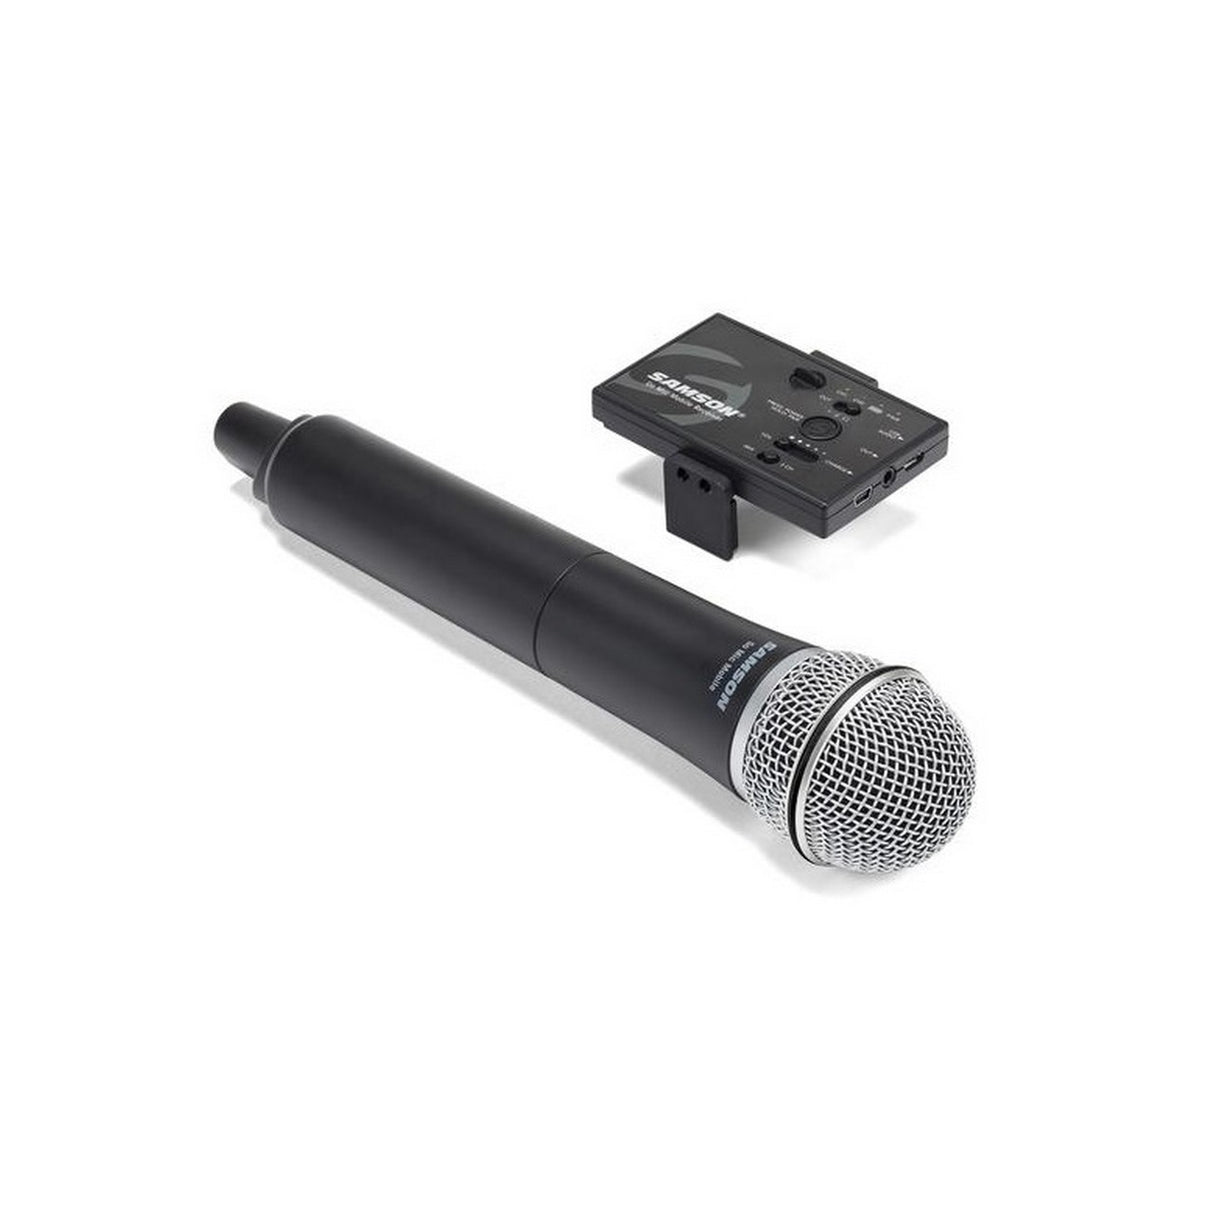 Samson Go Mic Mobile Digital Handheld Q8 Microphone System